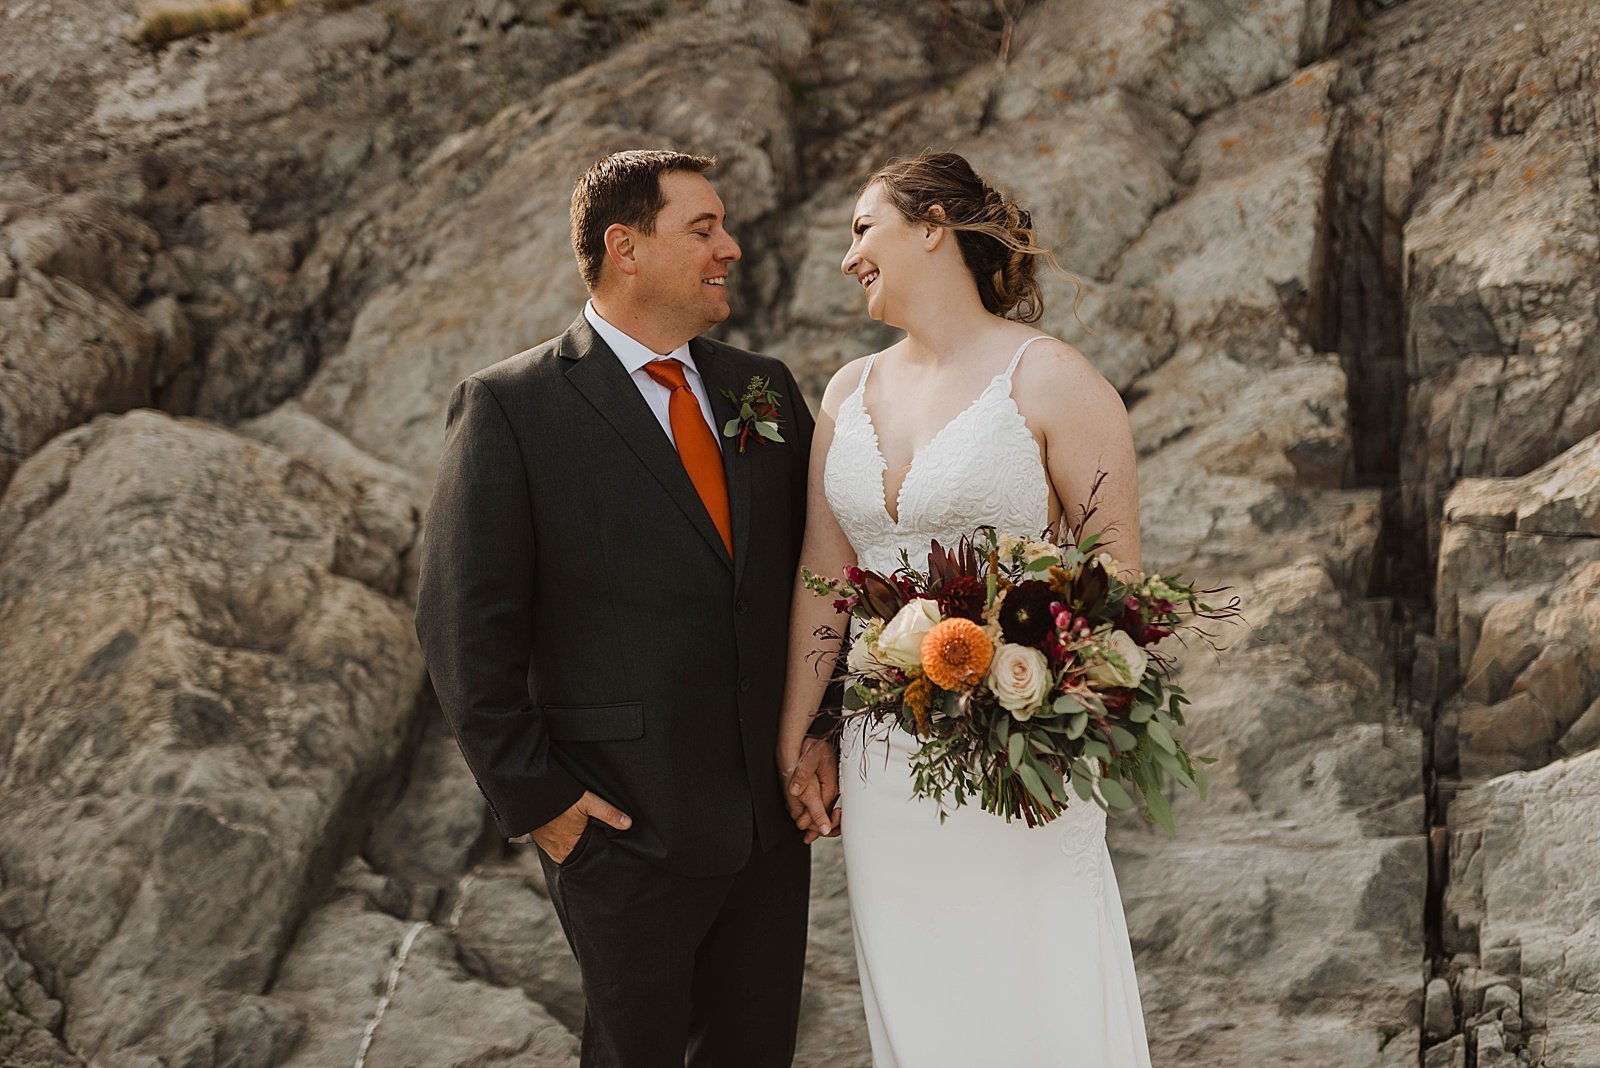  Bride and groom share a glance captured by Alaska wedding photographer Theresa McDonald. 